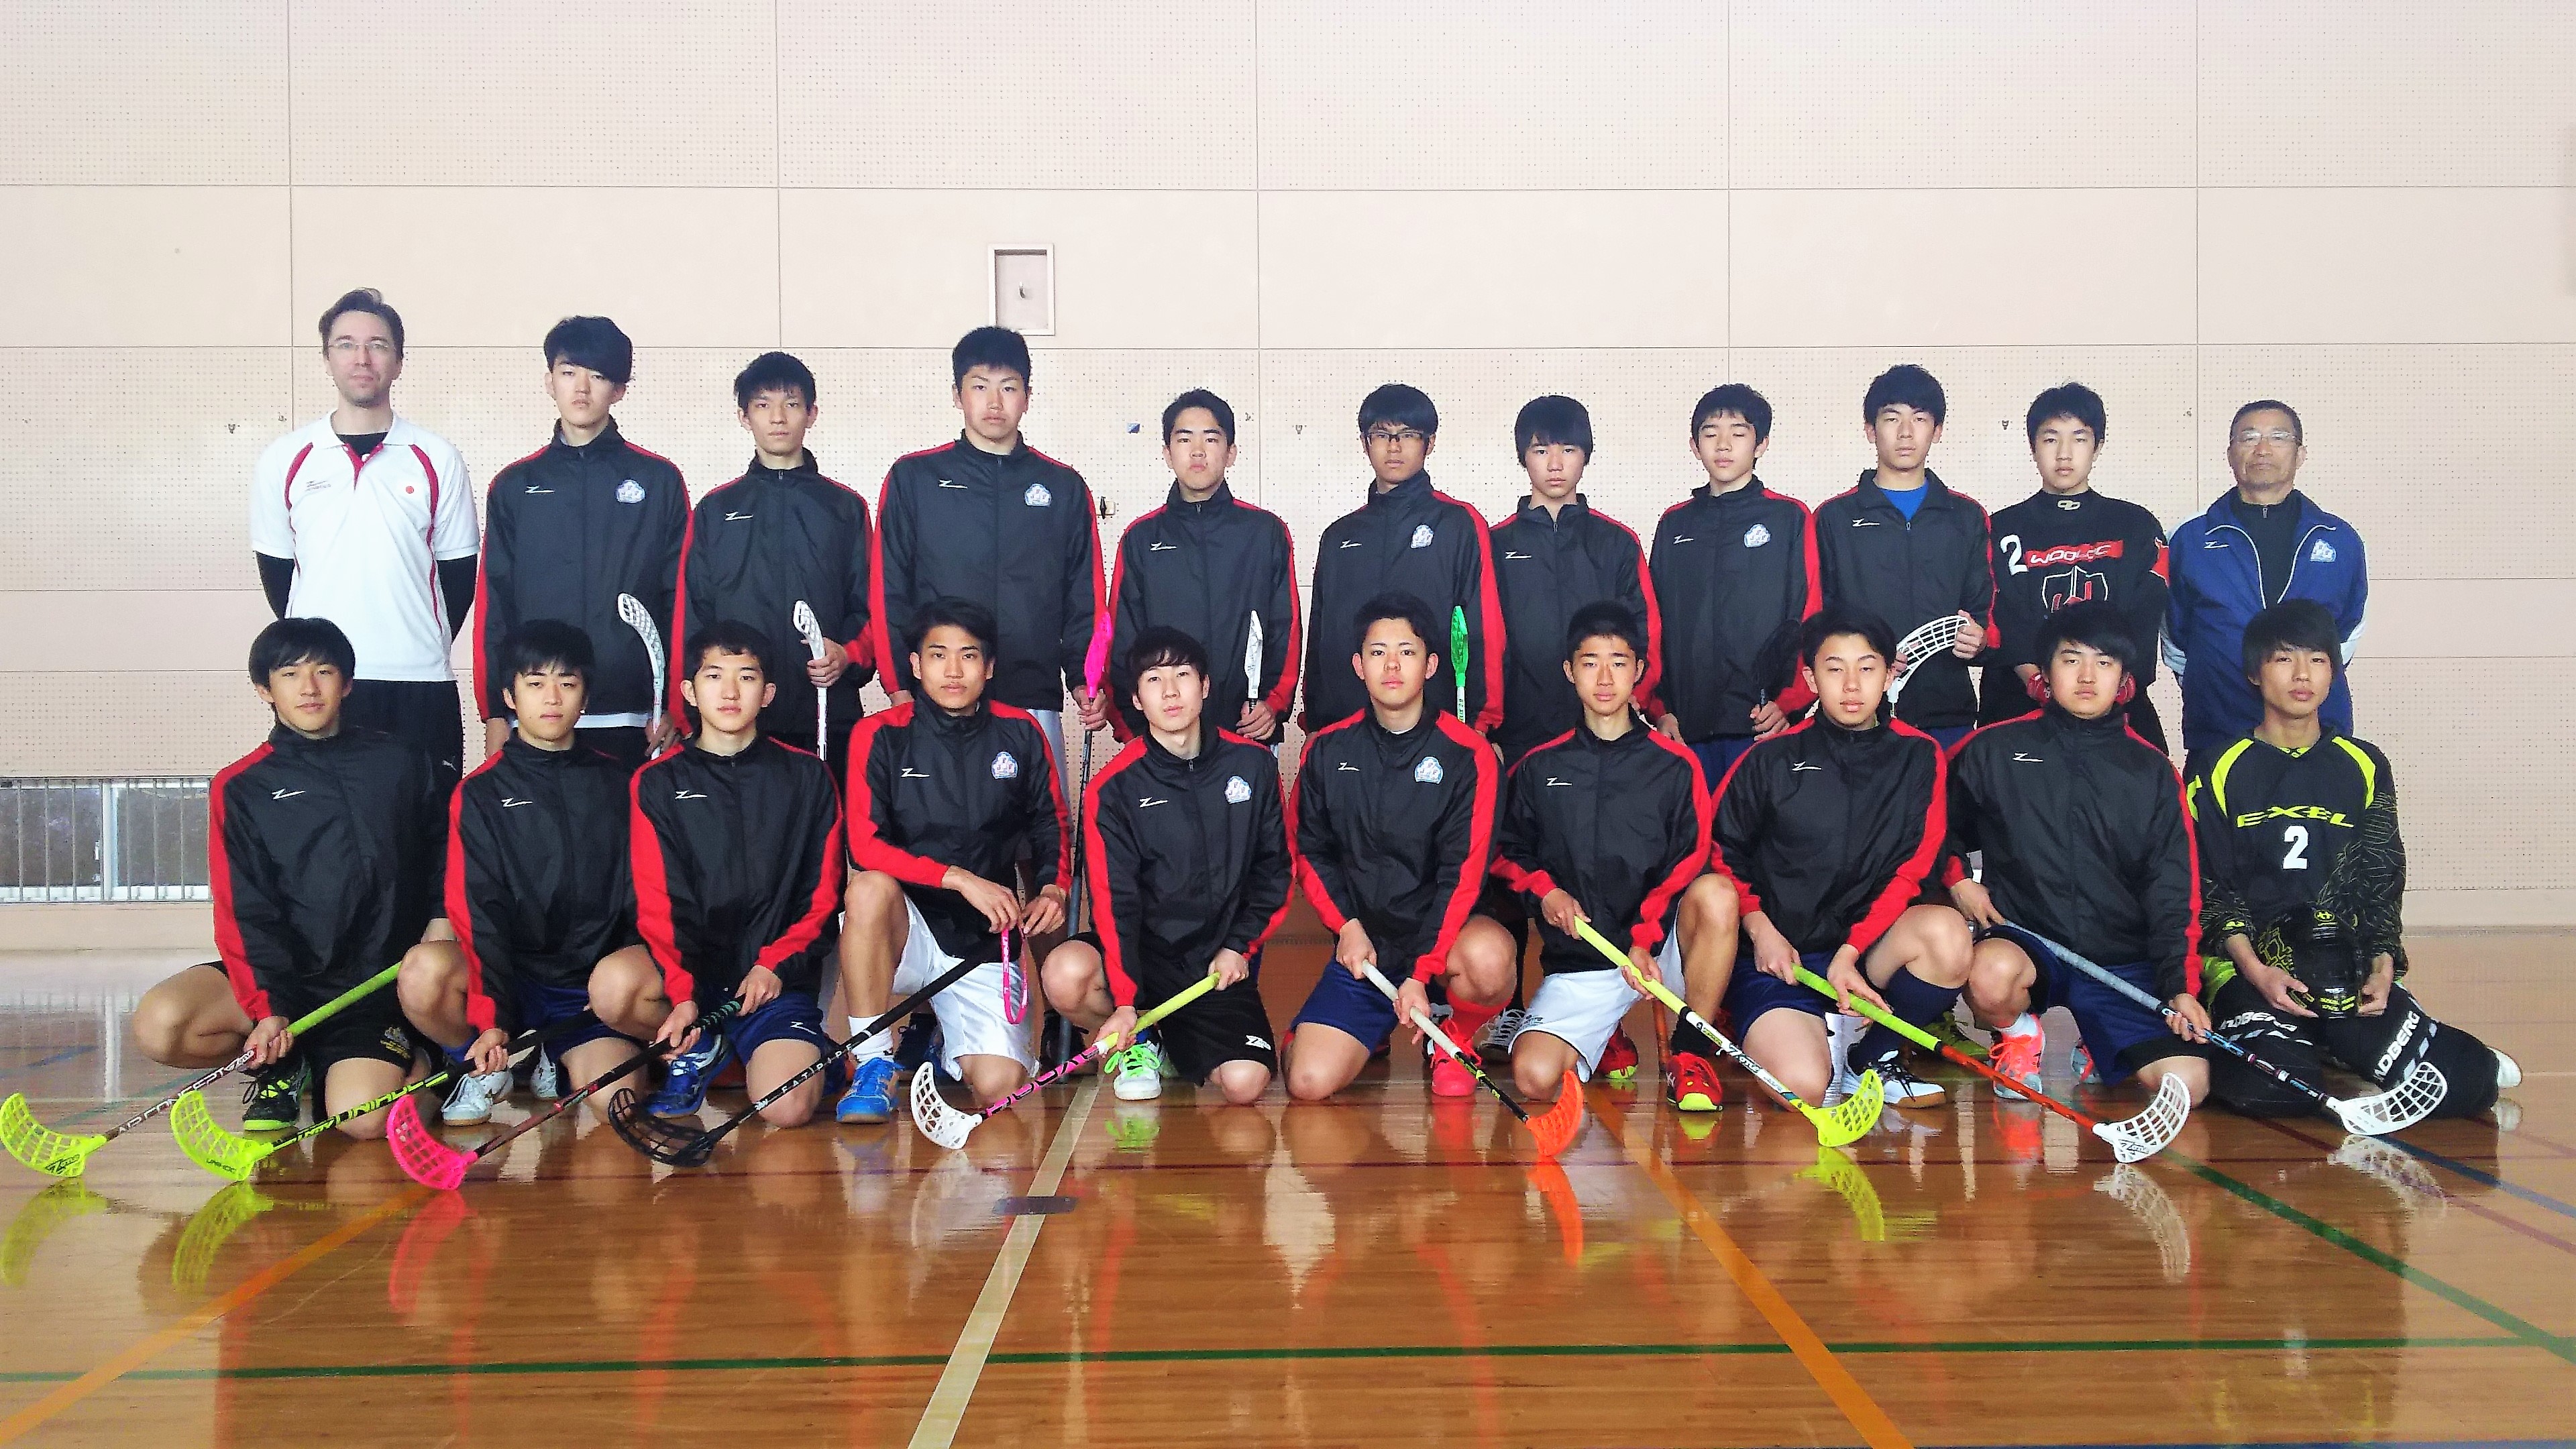 U 19世界フロアボール選手権大会17 U19 Wfc17 一般社団法人 日本フロアボール連盟